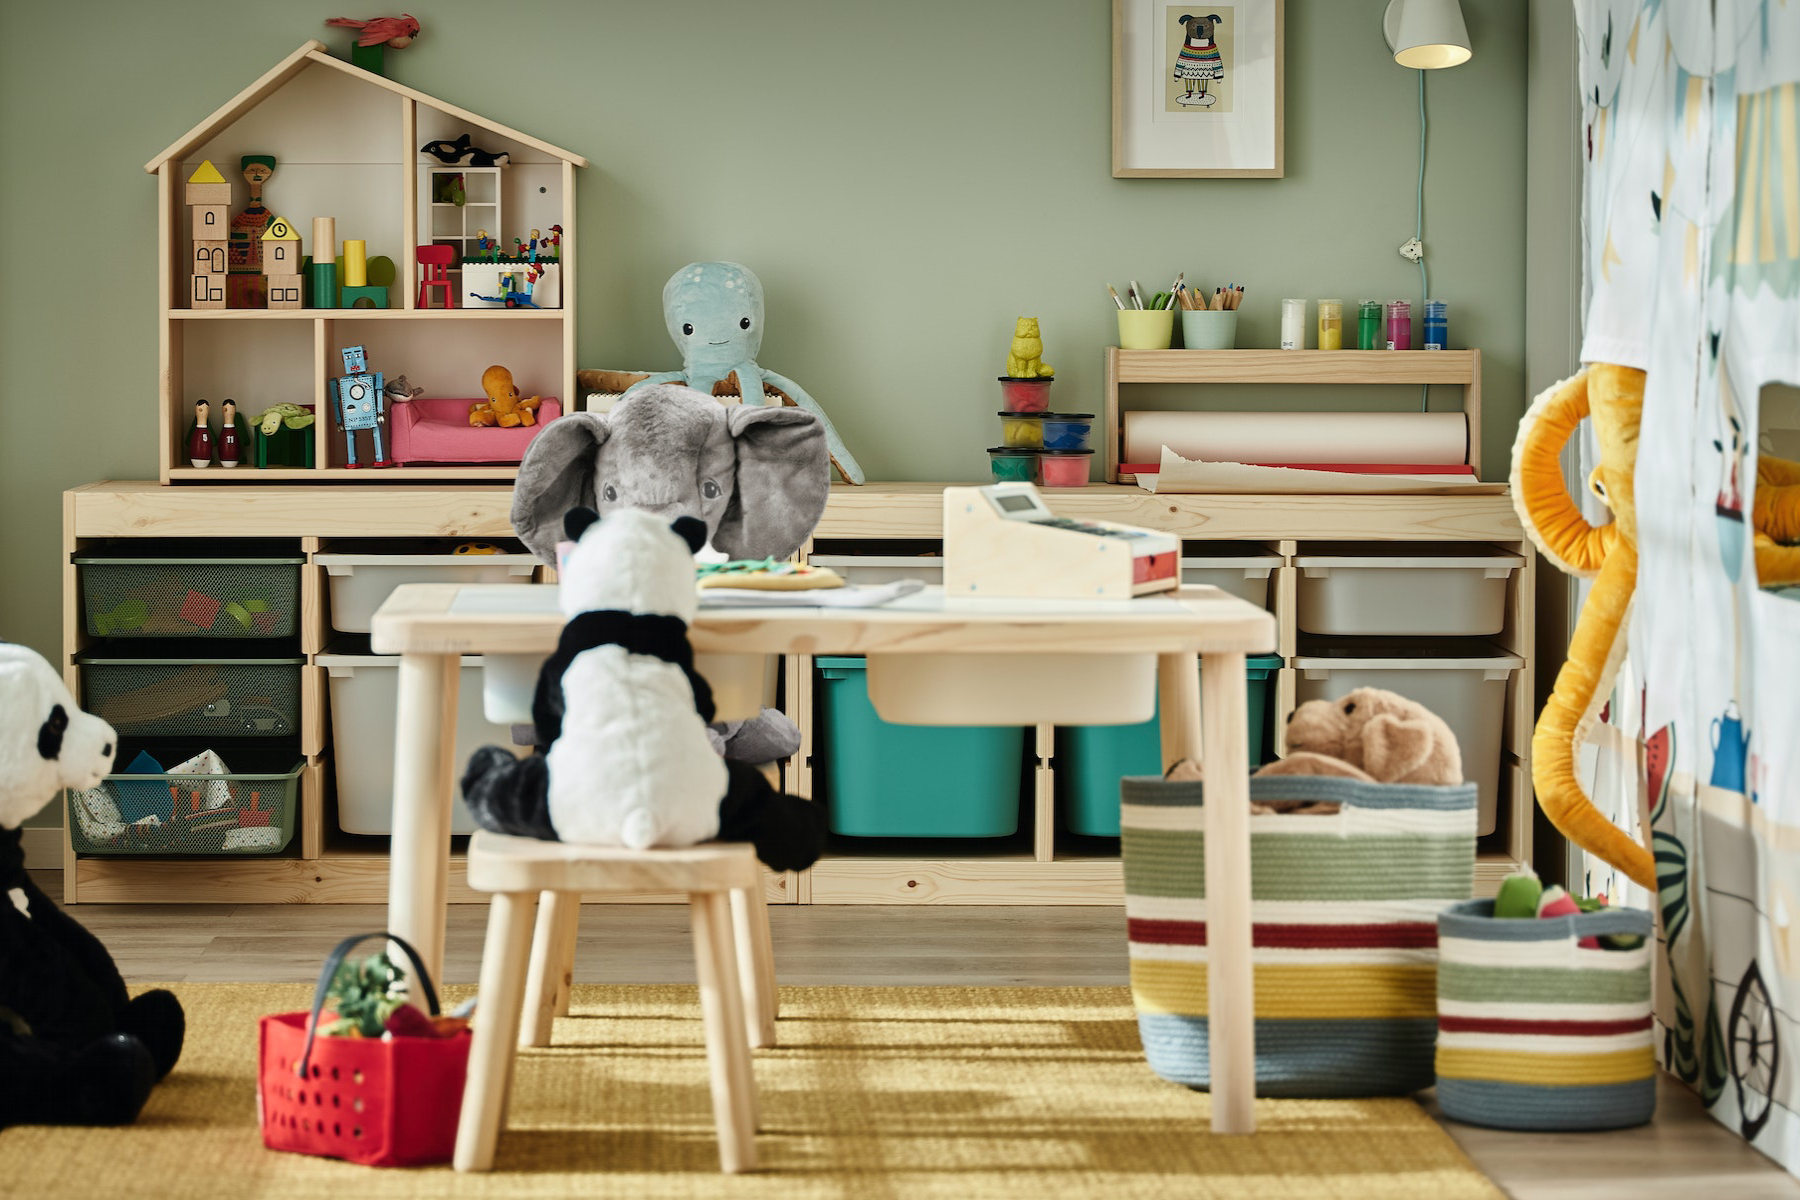 IKEA - Πώς να ενθαρρύνετε το παιχνίδι στο παιδικό δωμάτιο